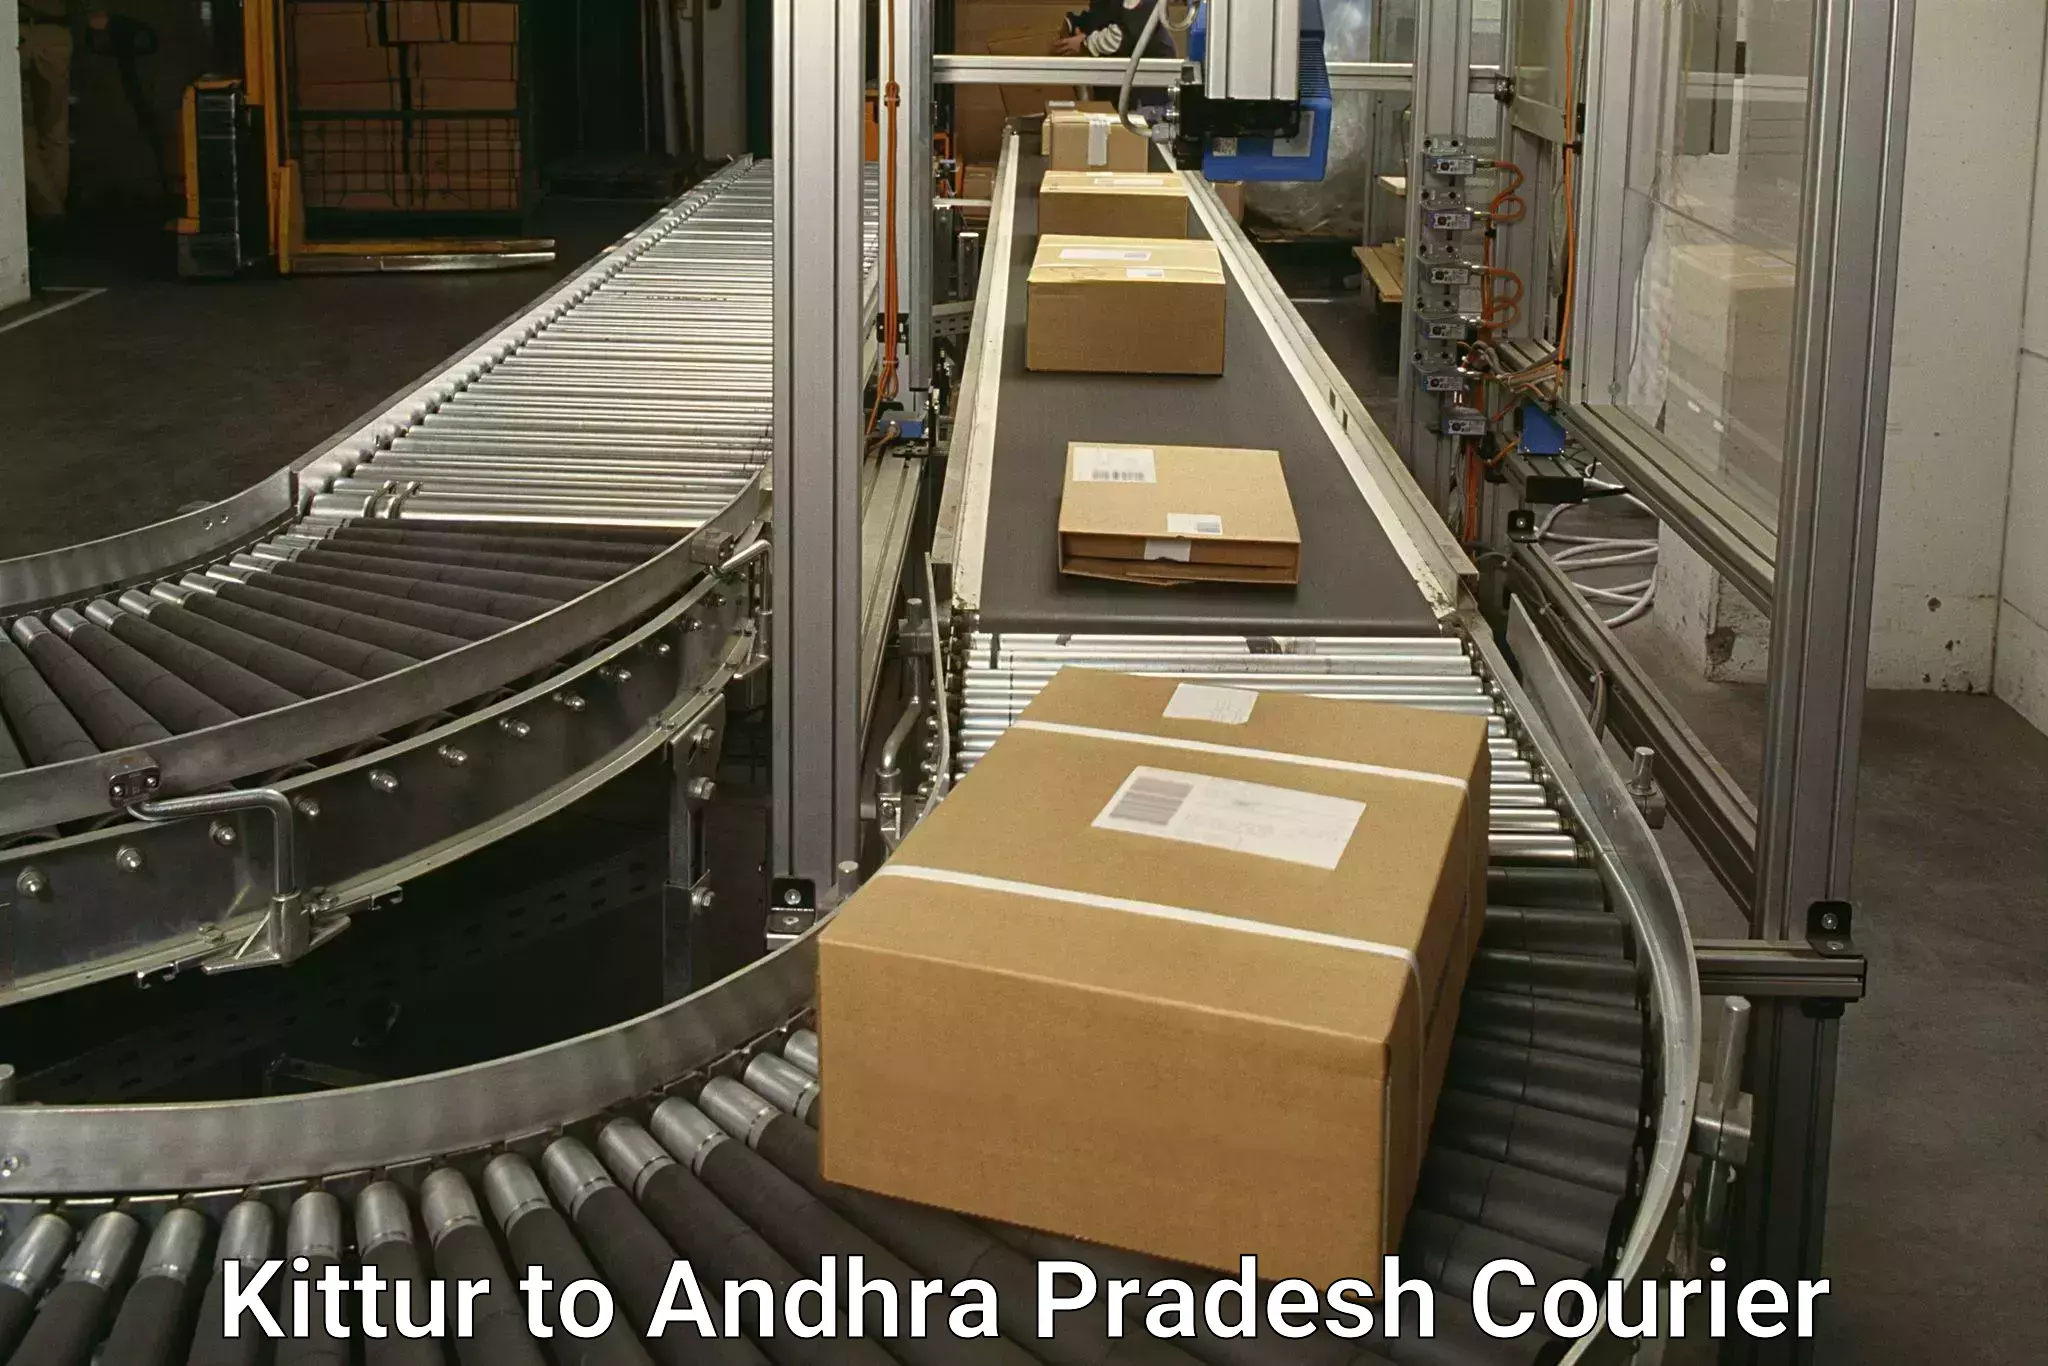 Courier service efficiency Kittur to Kakinada